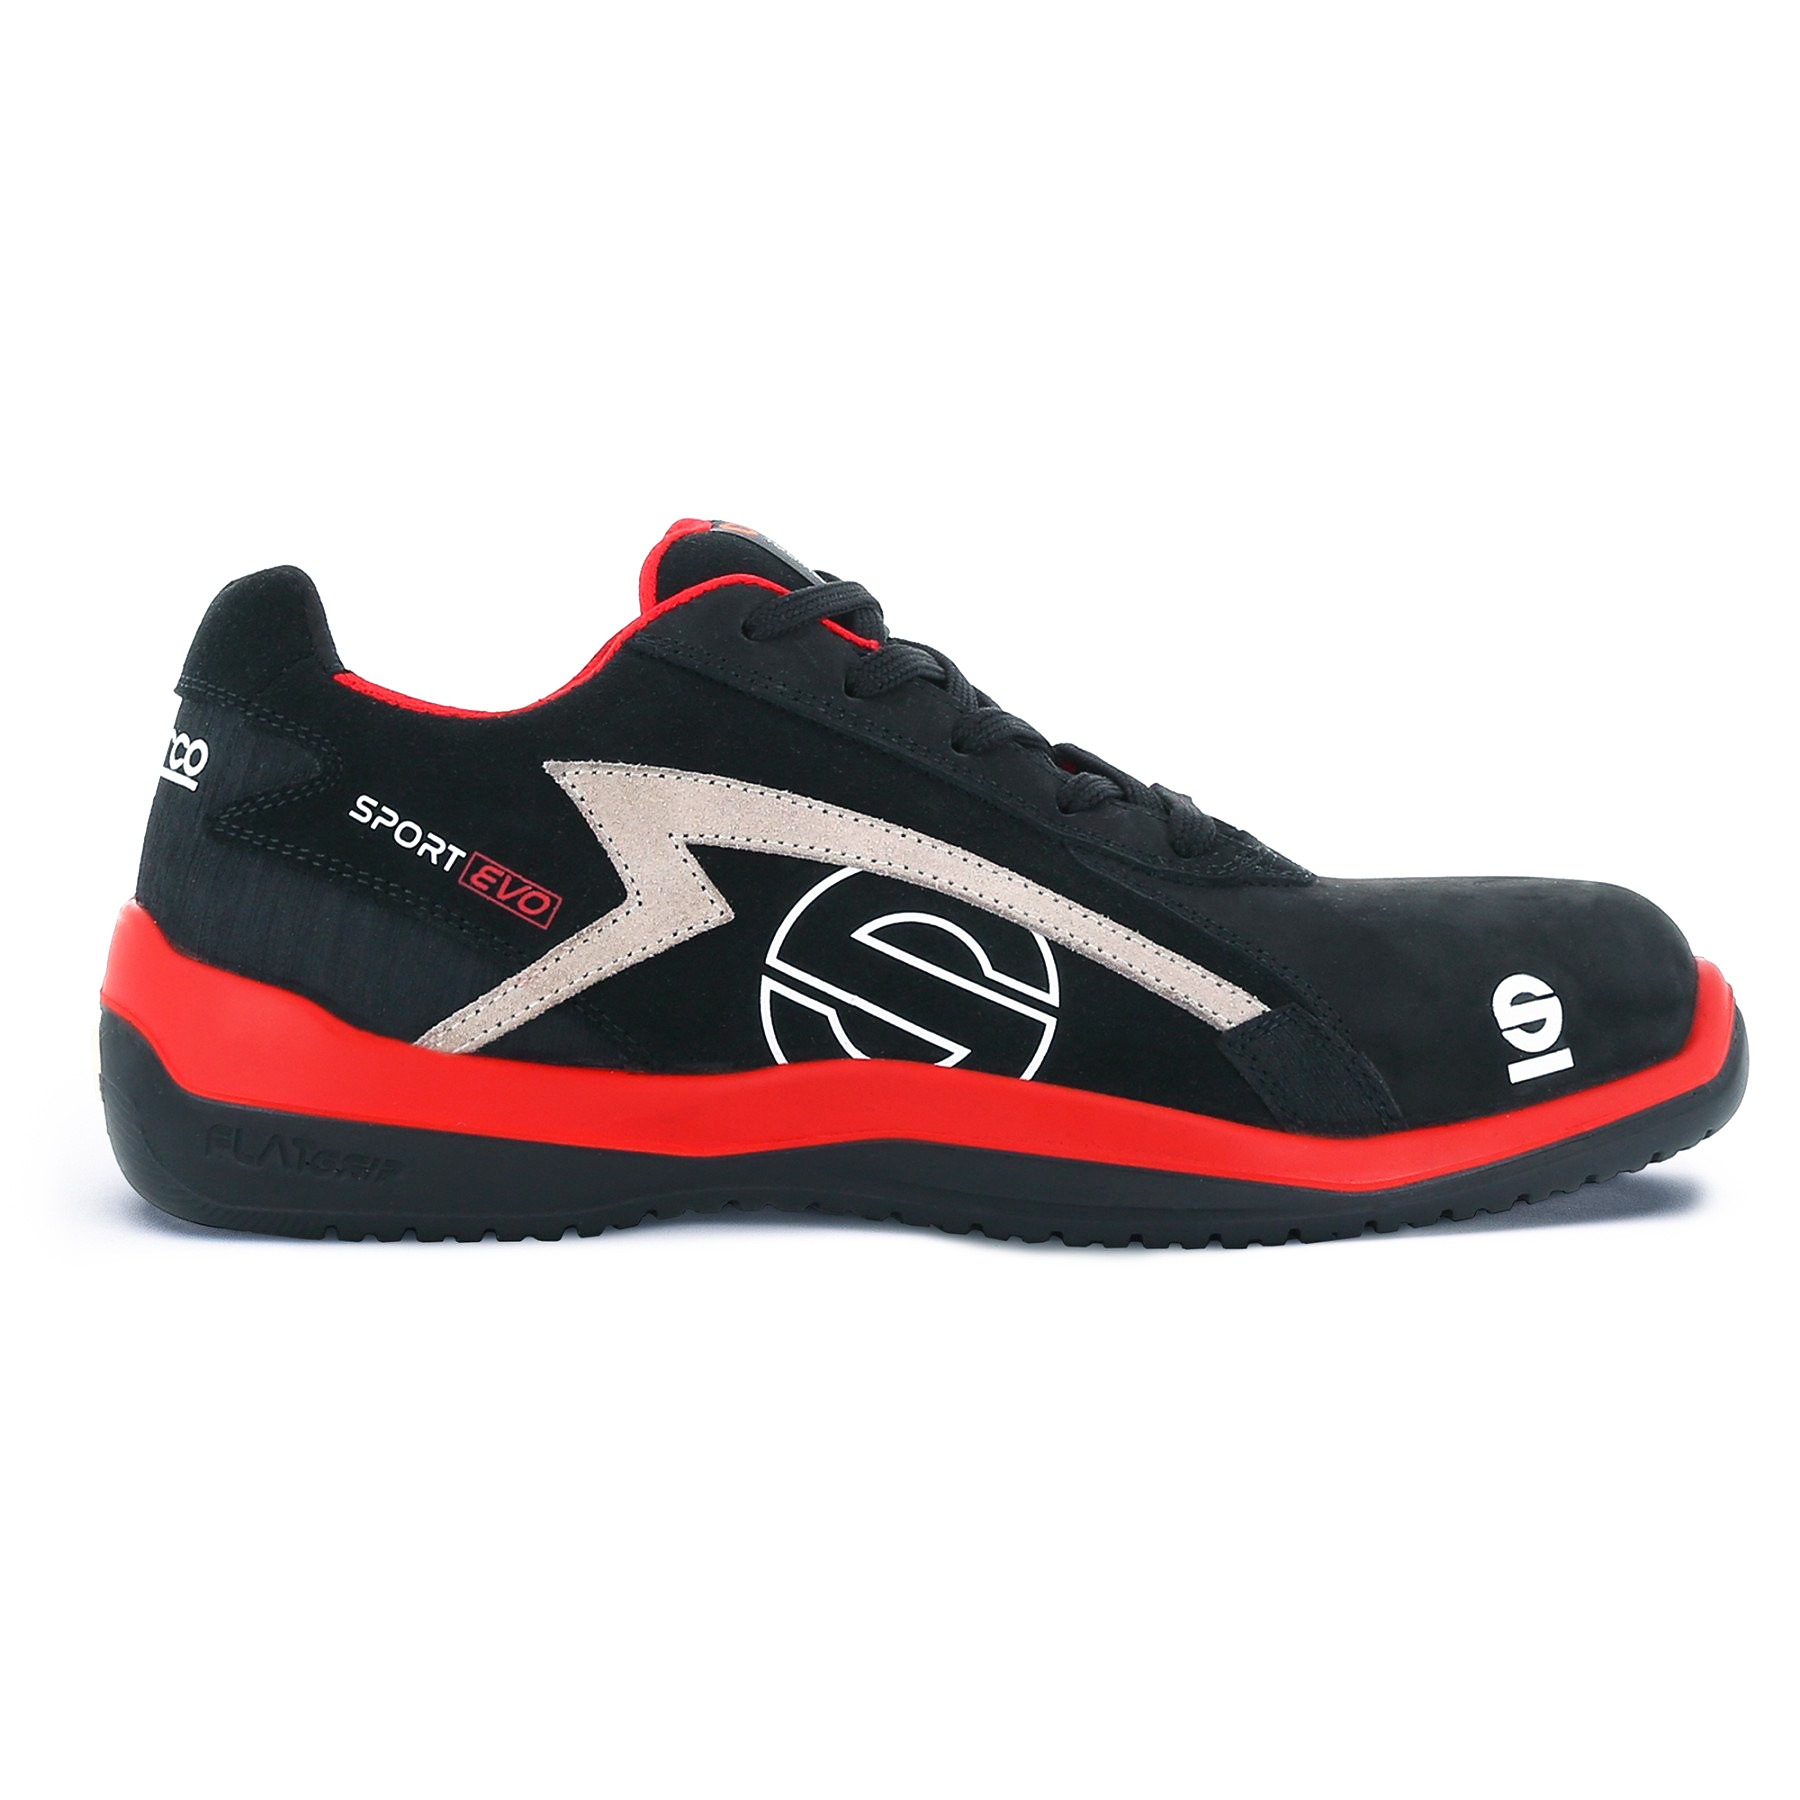 https://eltunelshop.com/17837/zapato-seguridad-sport-evo-donington-07516-rsnr-sparco.jpg